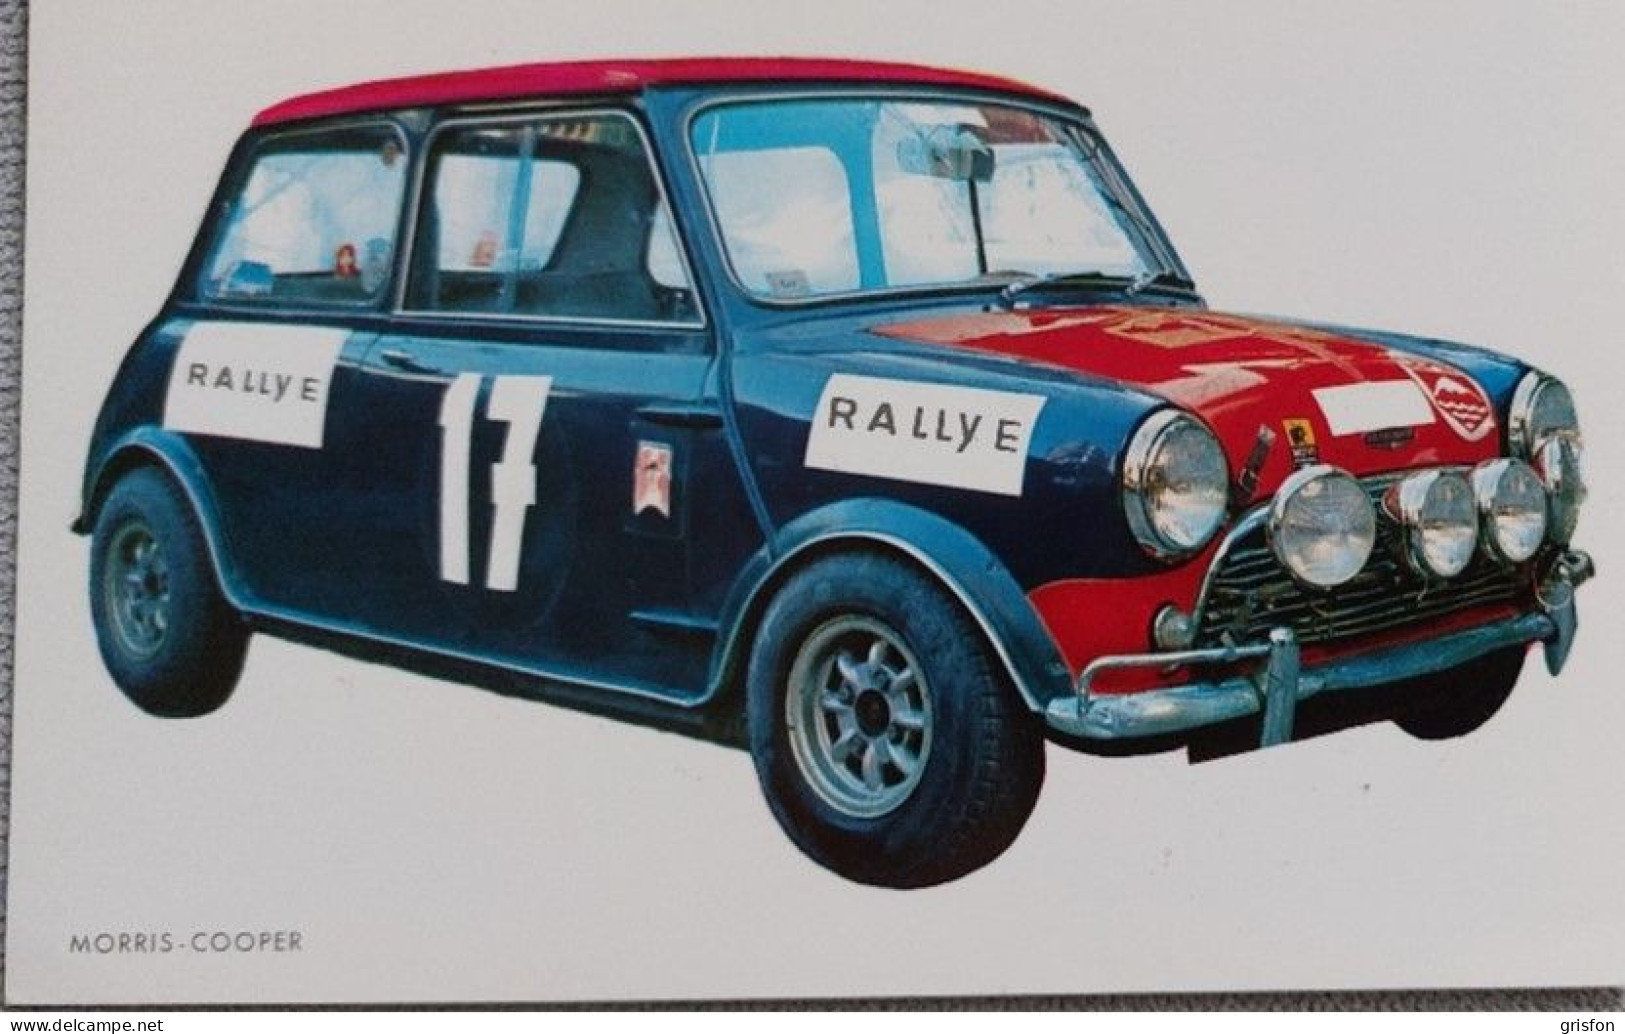 Morris Cooper - Rally's